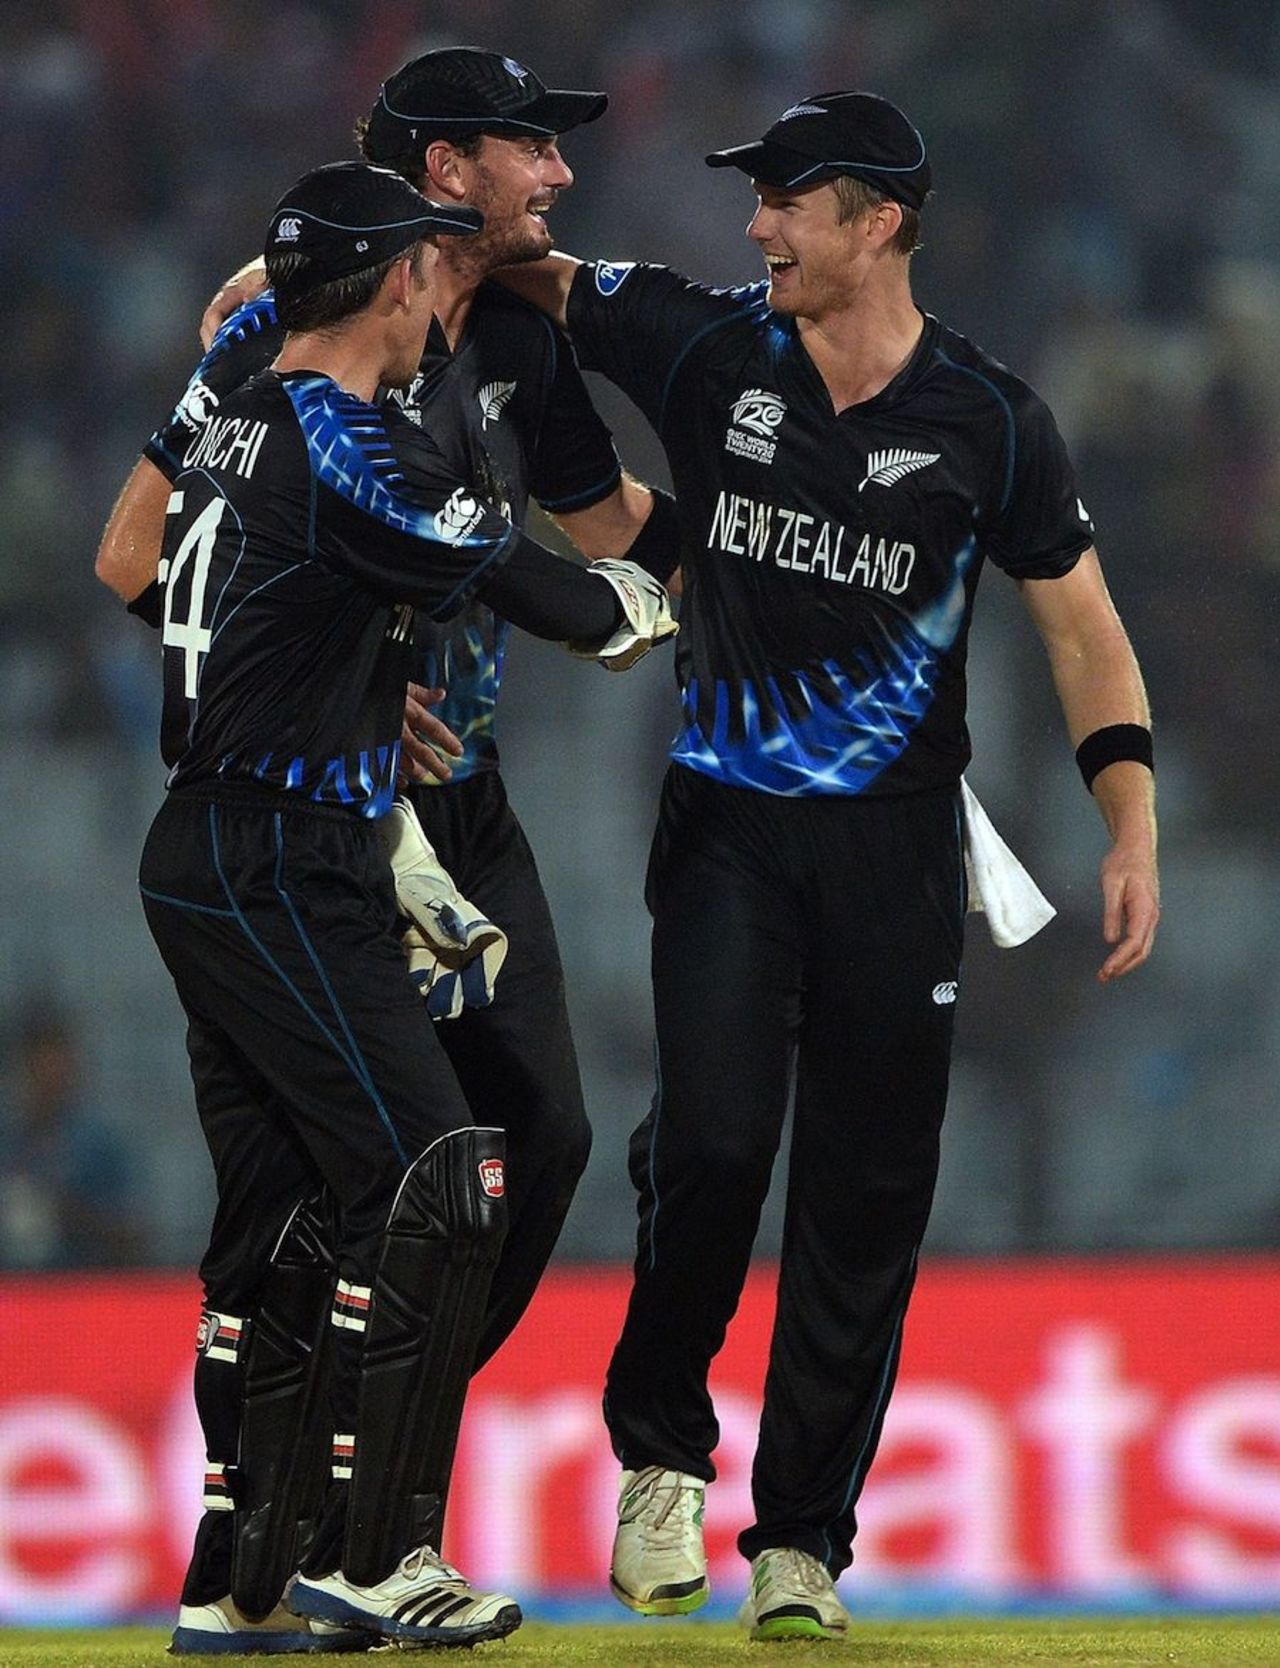 Jimmy Neesham, Kyle Mills and Luke Ronchi celebrate a wicket, New Zealand v Sri Lanka, World T20, Group 1, Chittagong, March 31, 2014